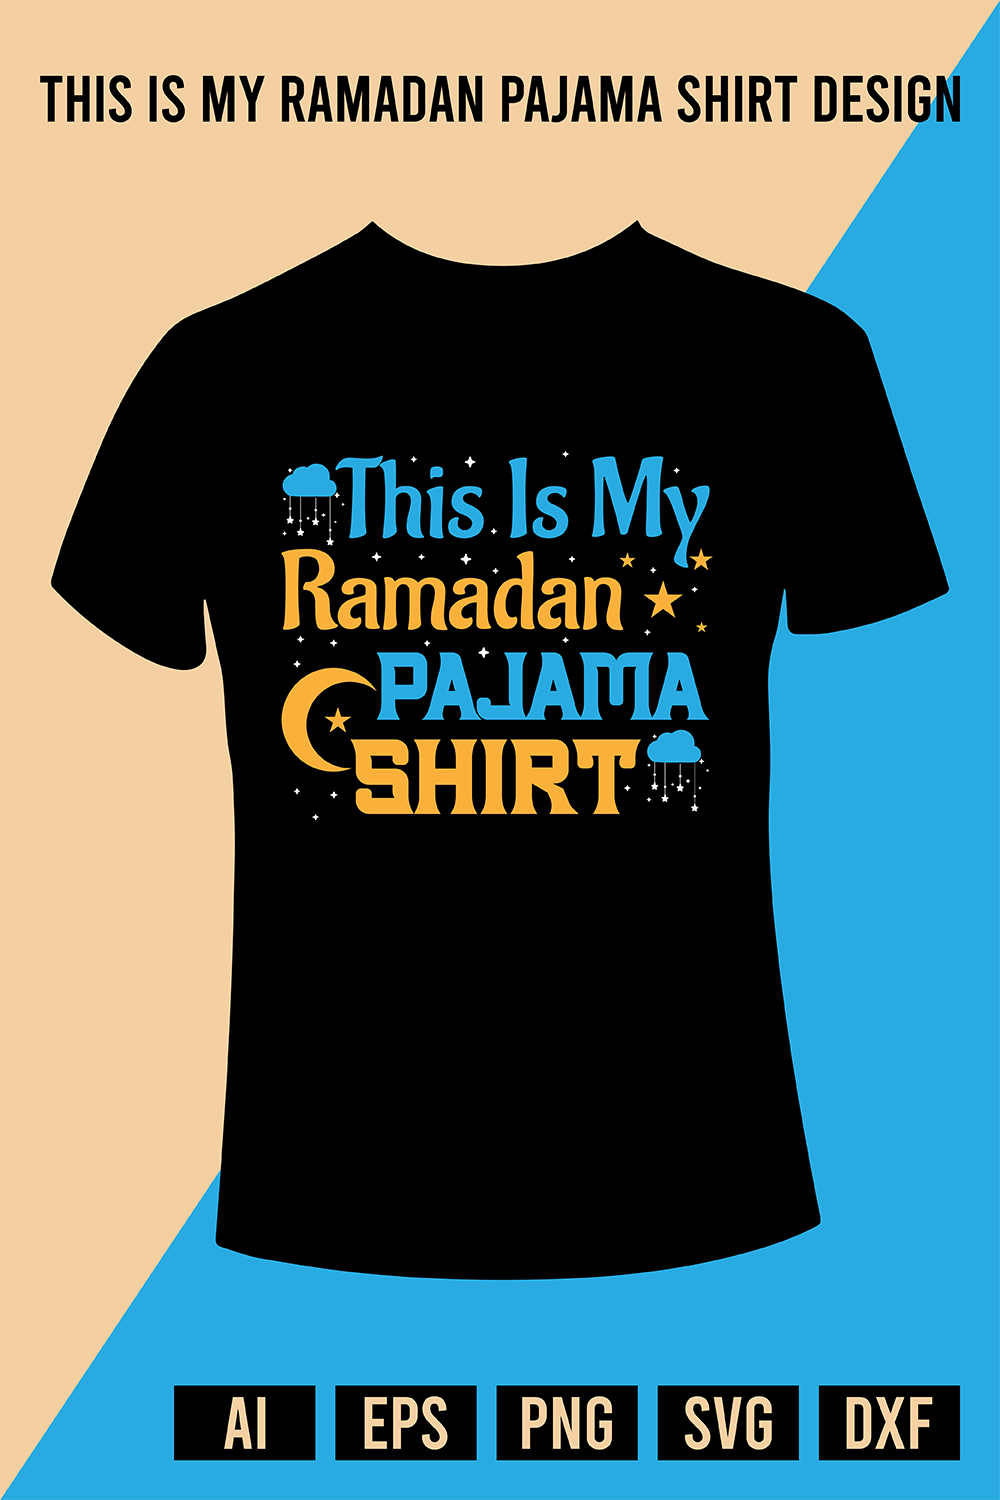 This Is My Ramadan Pajama T-Shirt Design pinterest preview image.